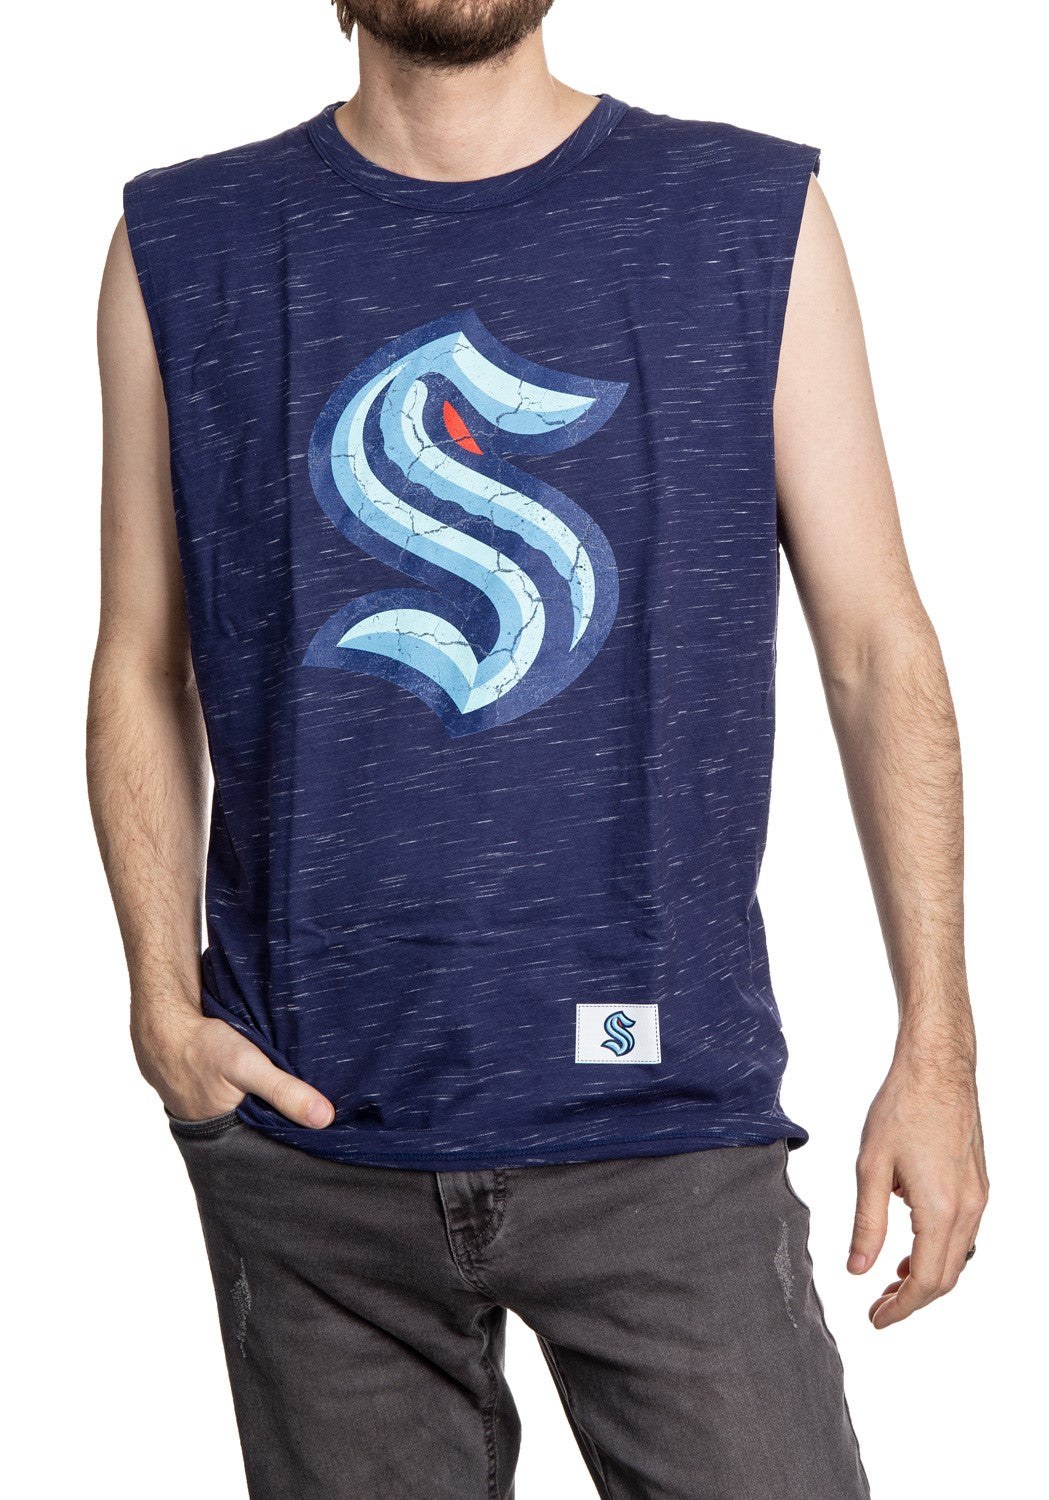 Seattle Kraken Logo Sleeveless Shirt for Men – Crew Neck Space Dyed